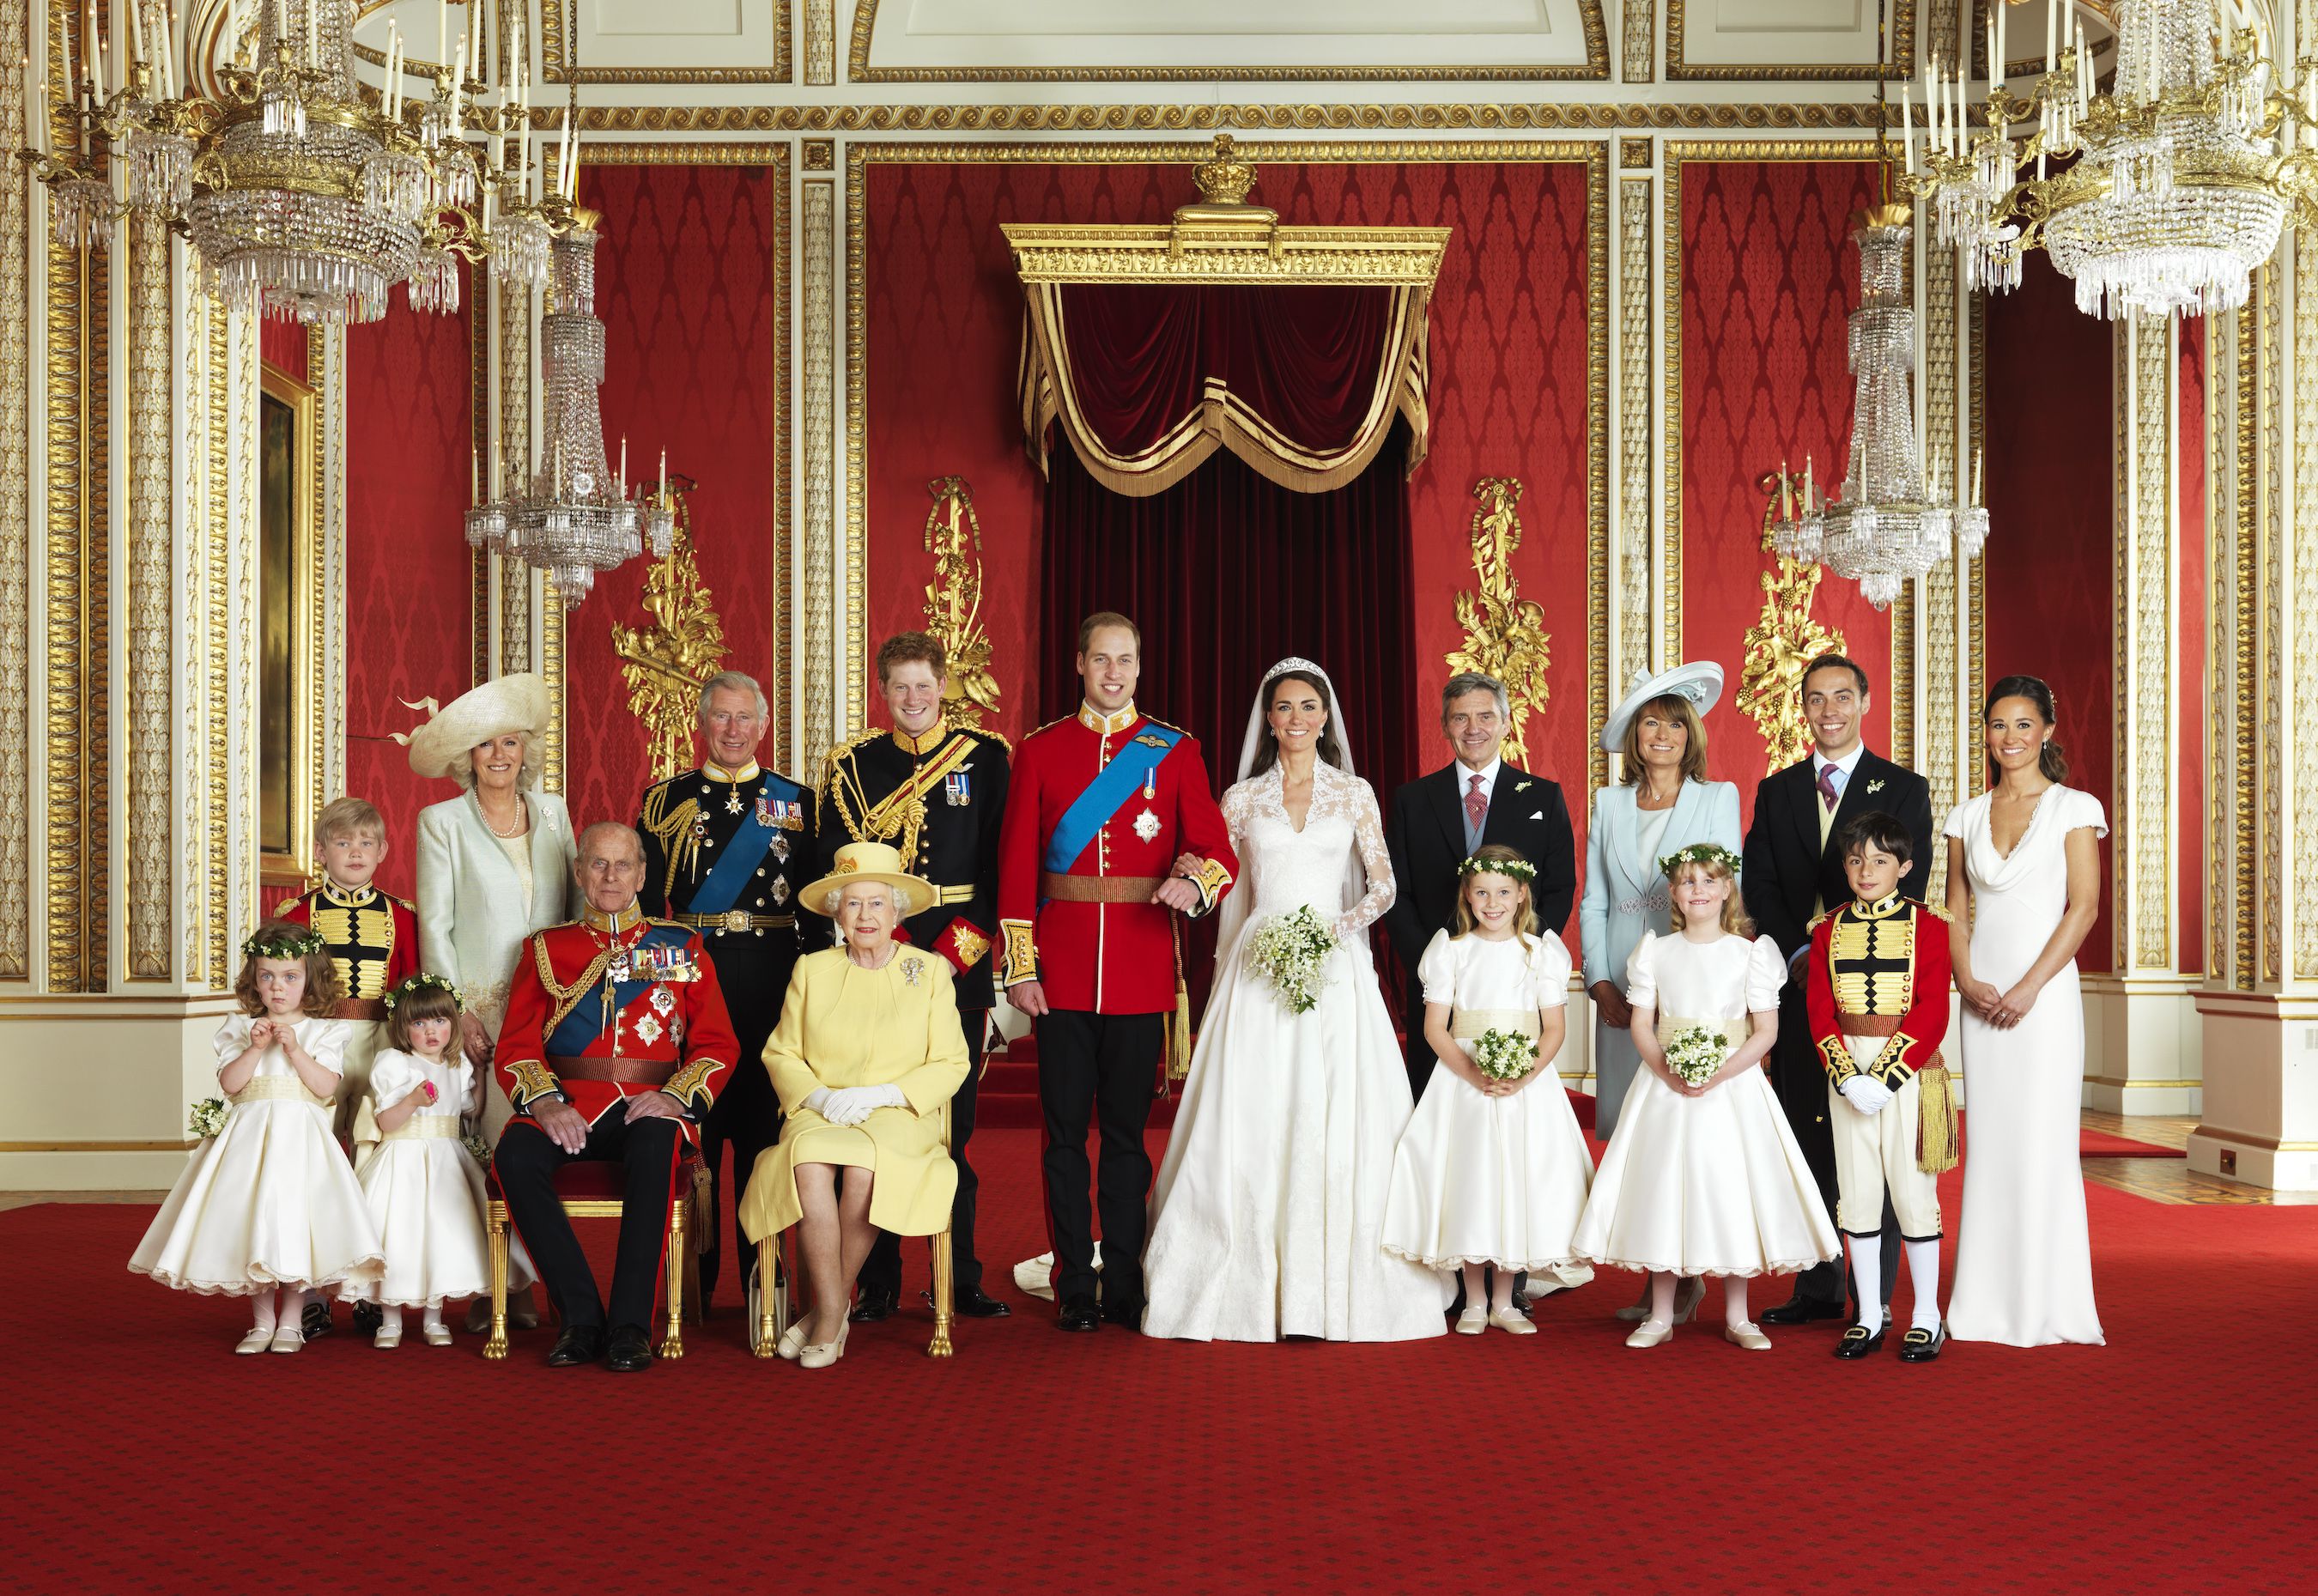 Kate Middleton Prince William Wedding Photos - Royal Wedding 2011